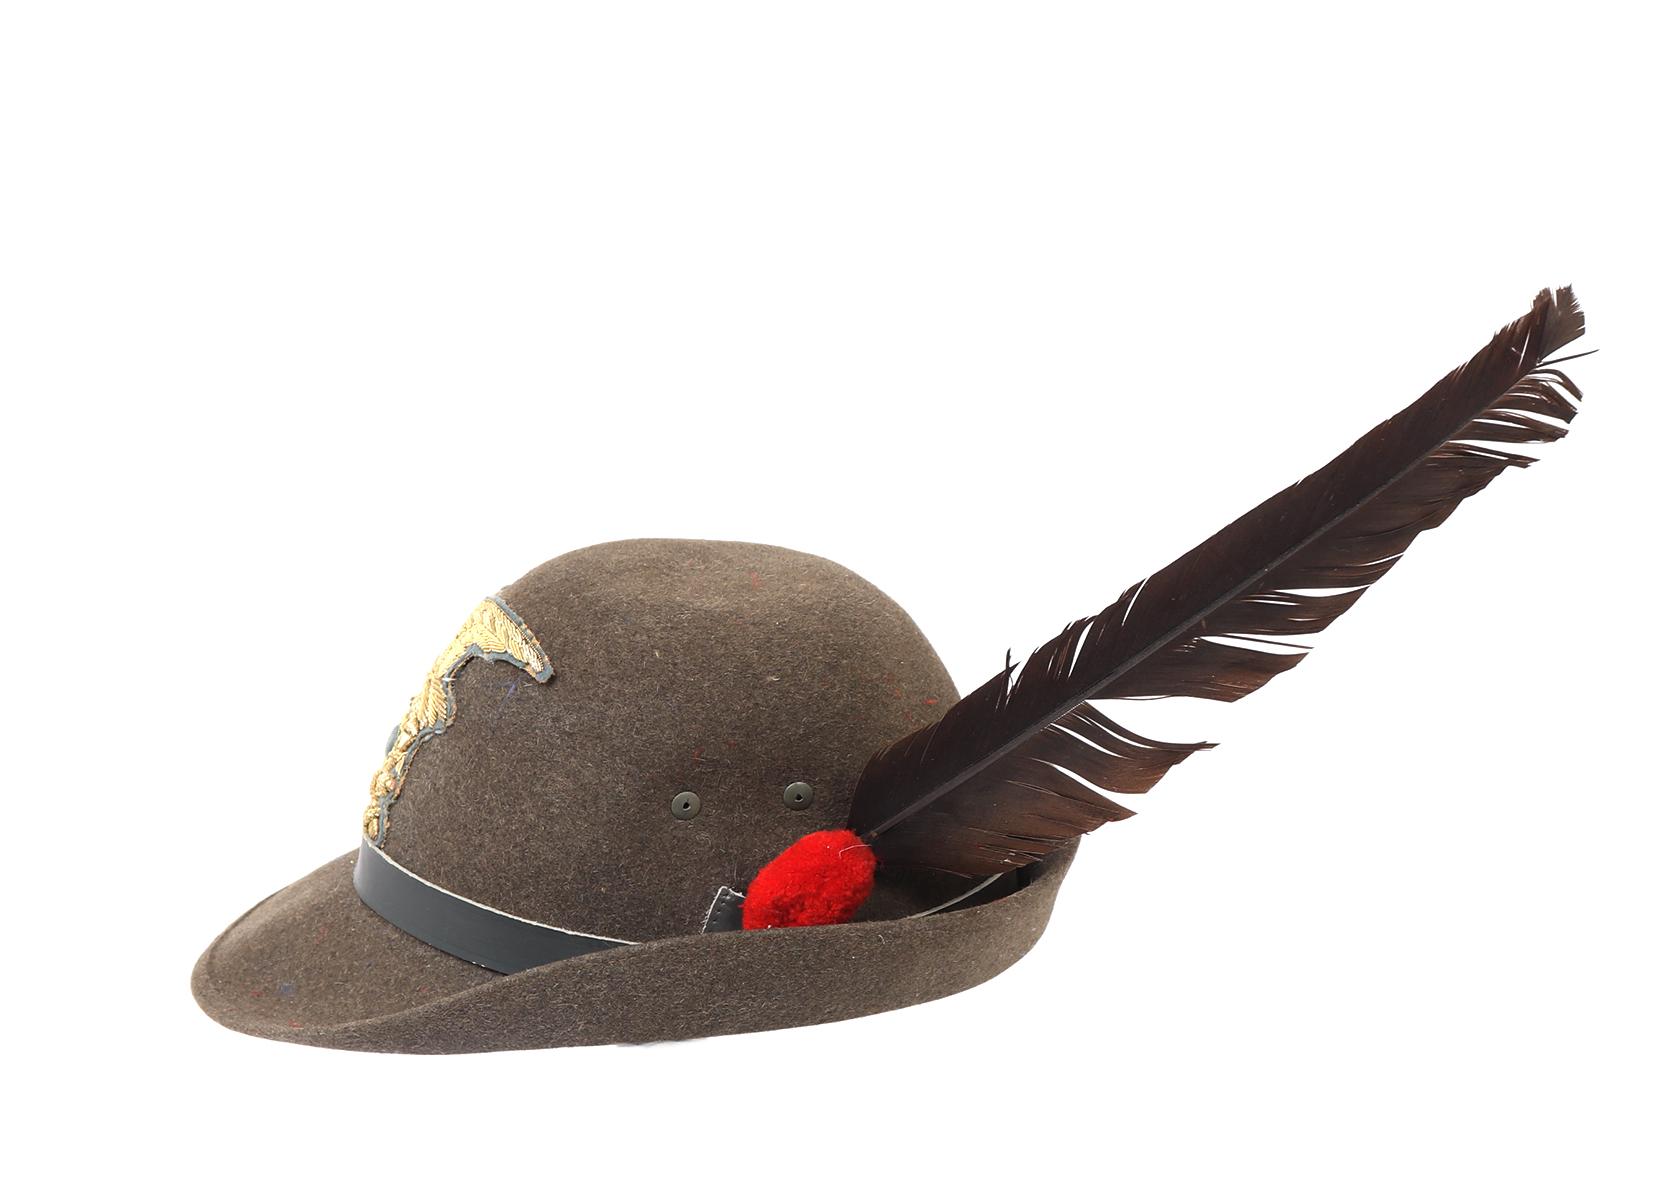 Italian Mountain Troops Alpini Hat (The Black Feathers)